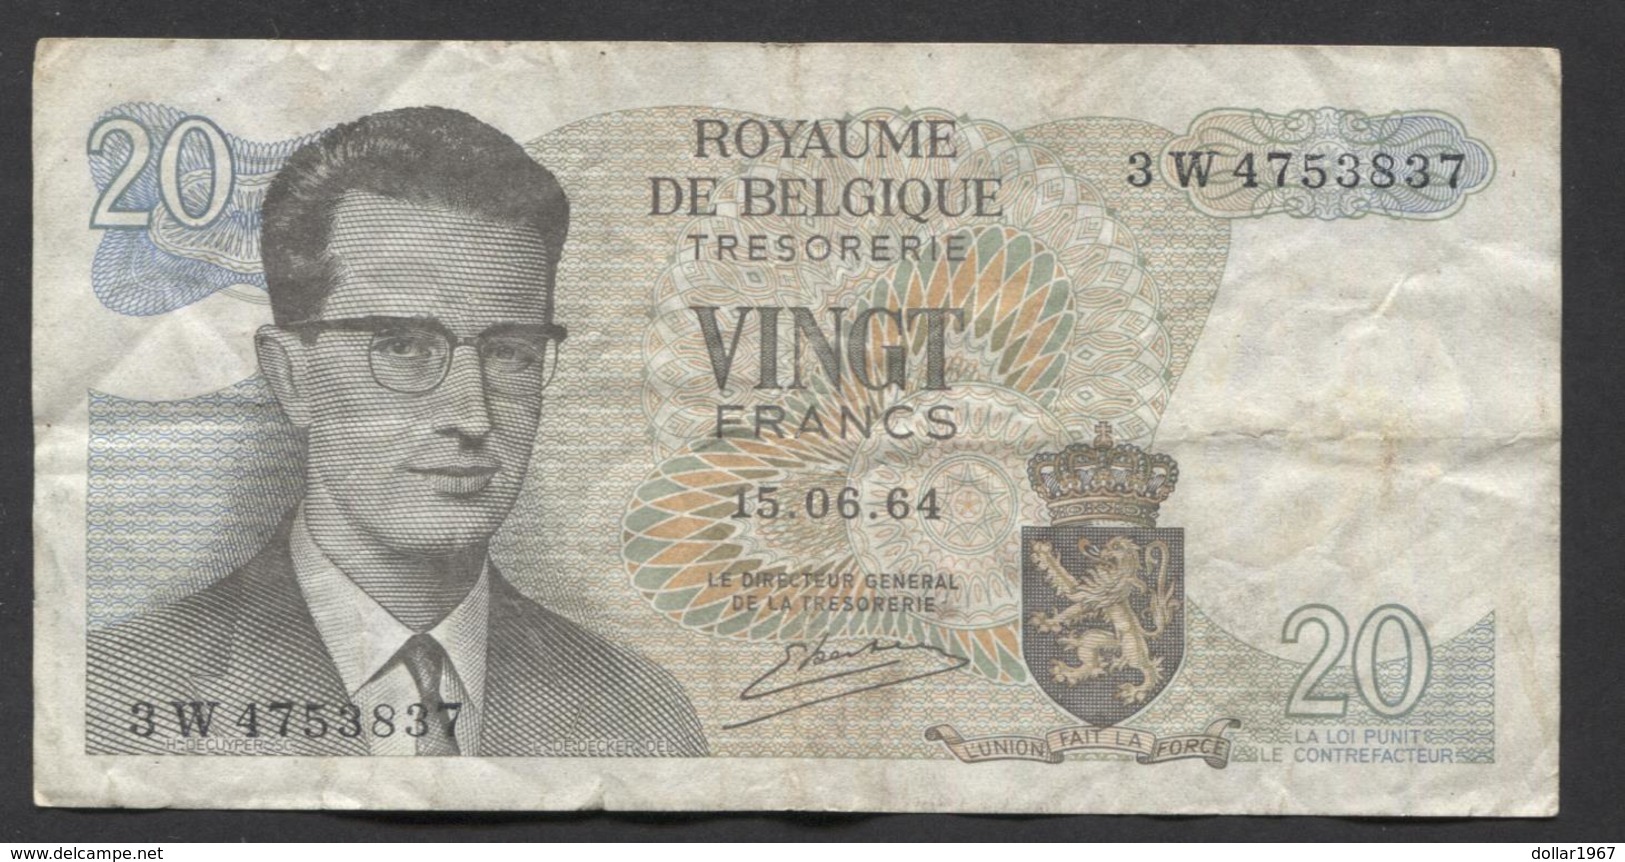 België Belgique Belgium 15 06 1964 -  20 Francs Atomium Baudouin. 3 W 4753837 - 20 Francs